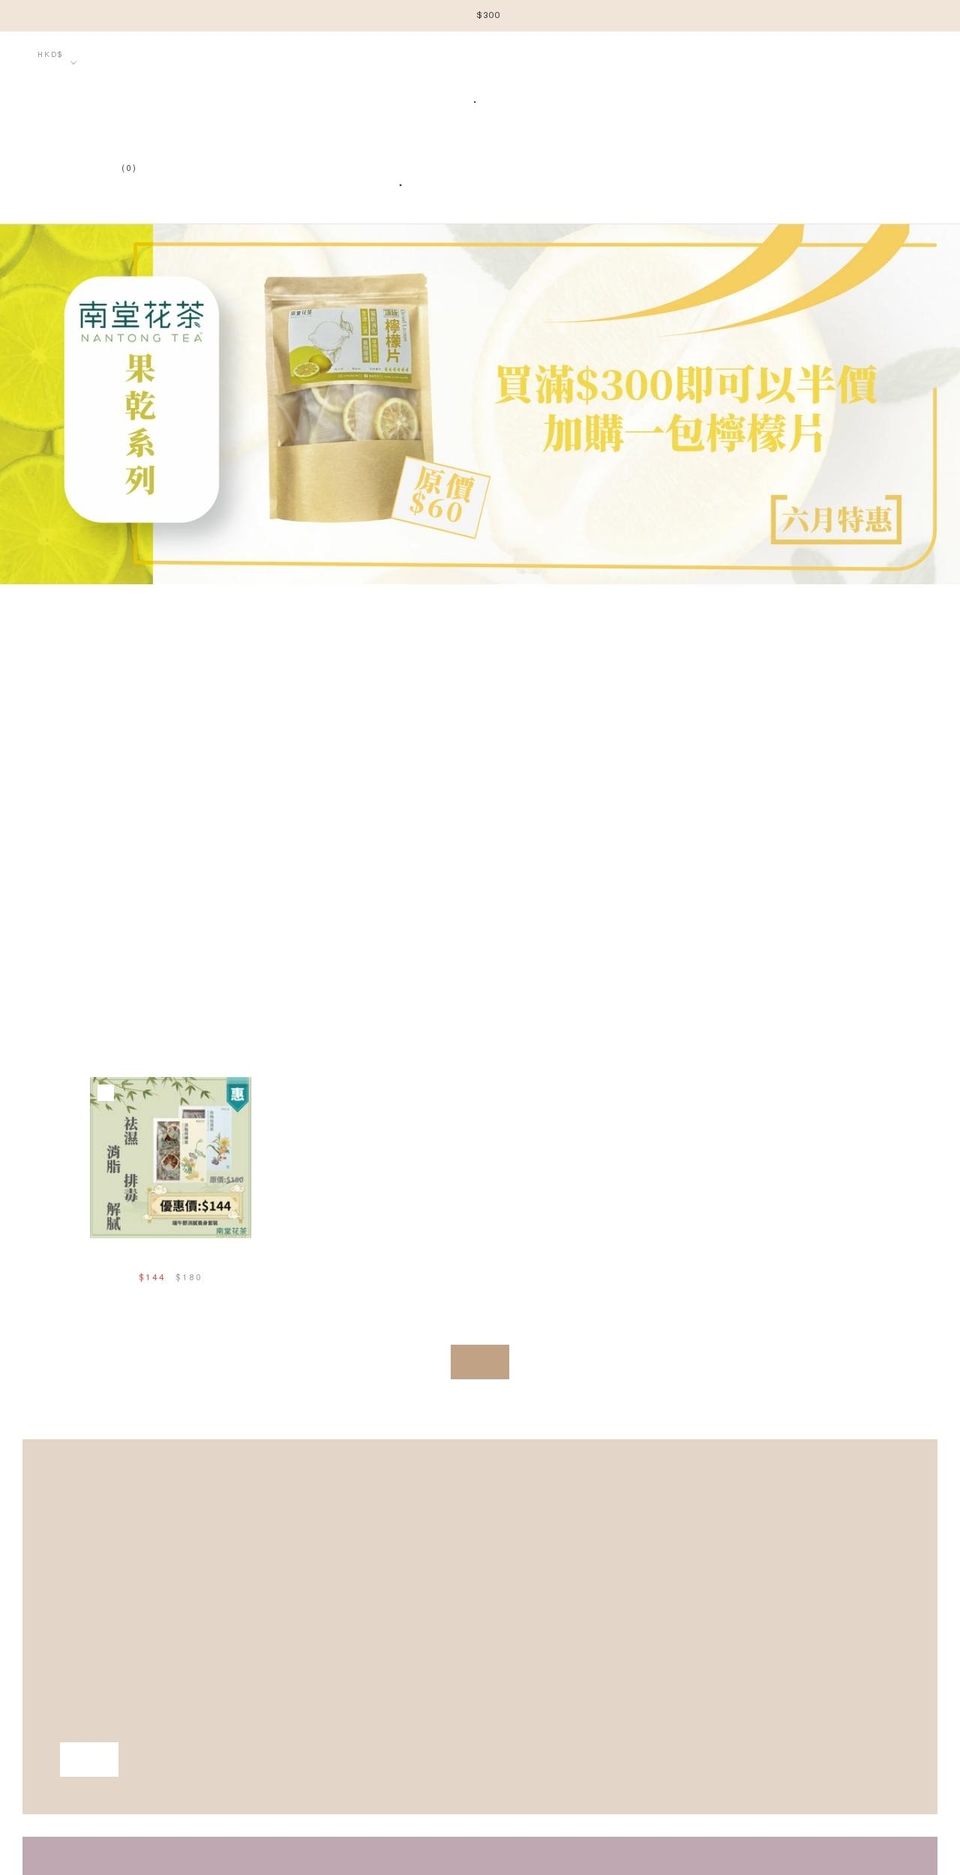 aftertea.hk shopify website screenshot